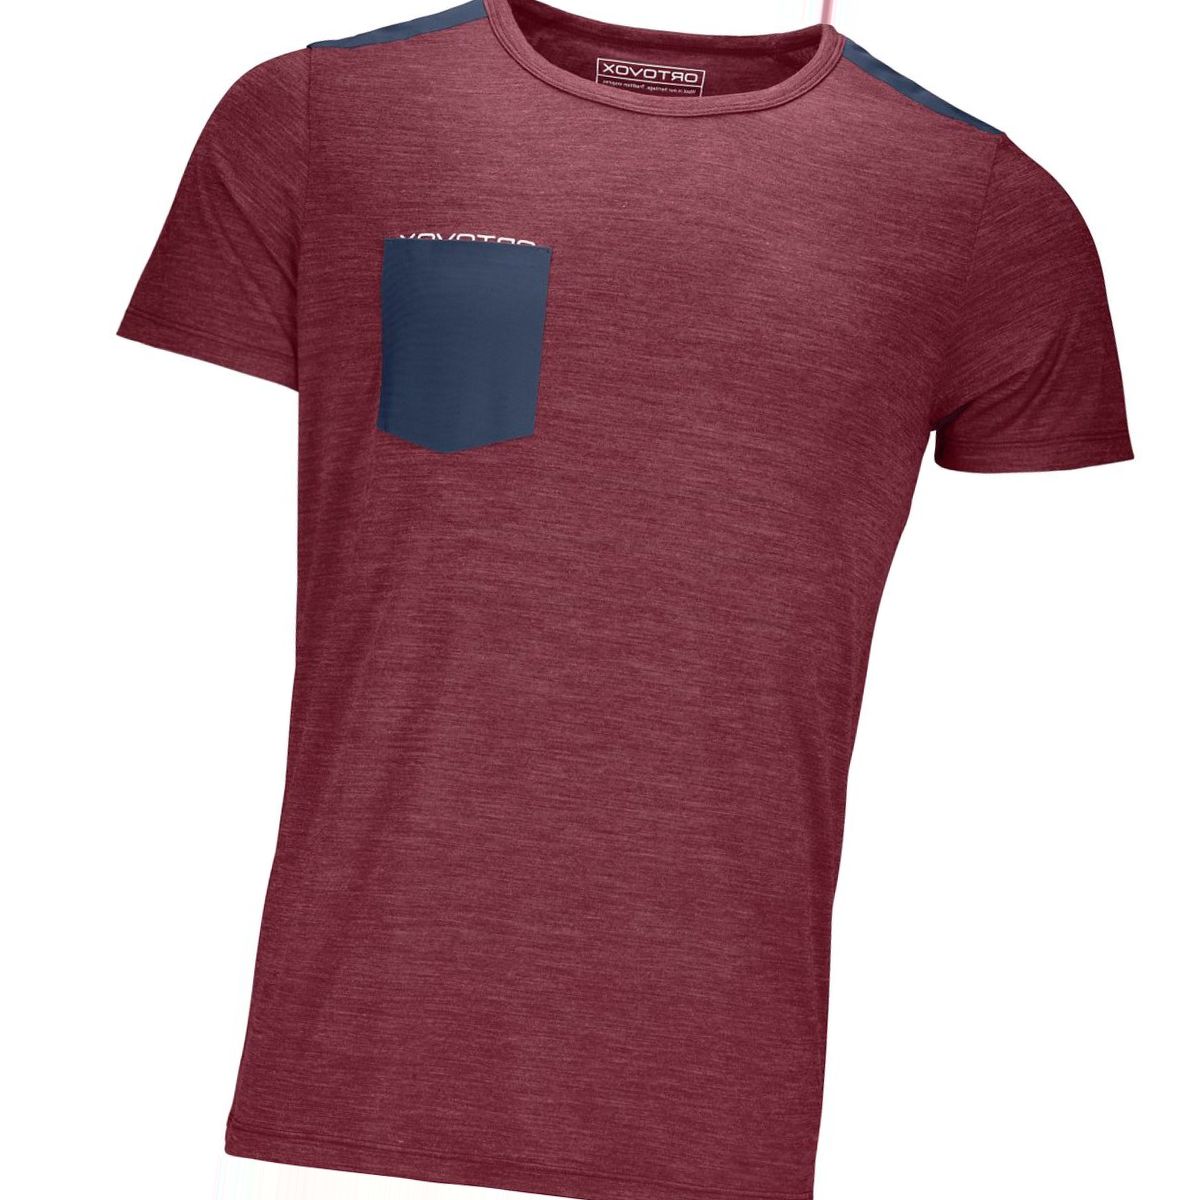 Ortovox 120 Cool Tec Short-Sleeve T-Shirt - Men's